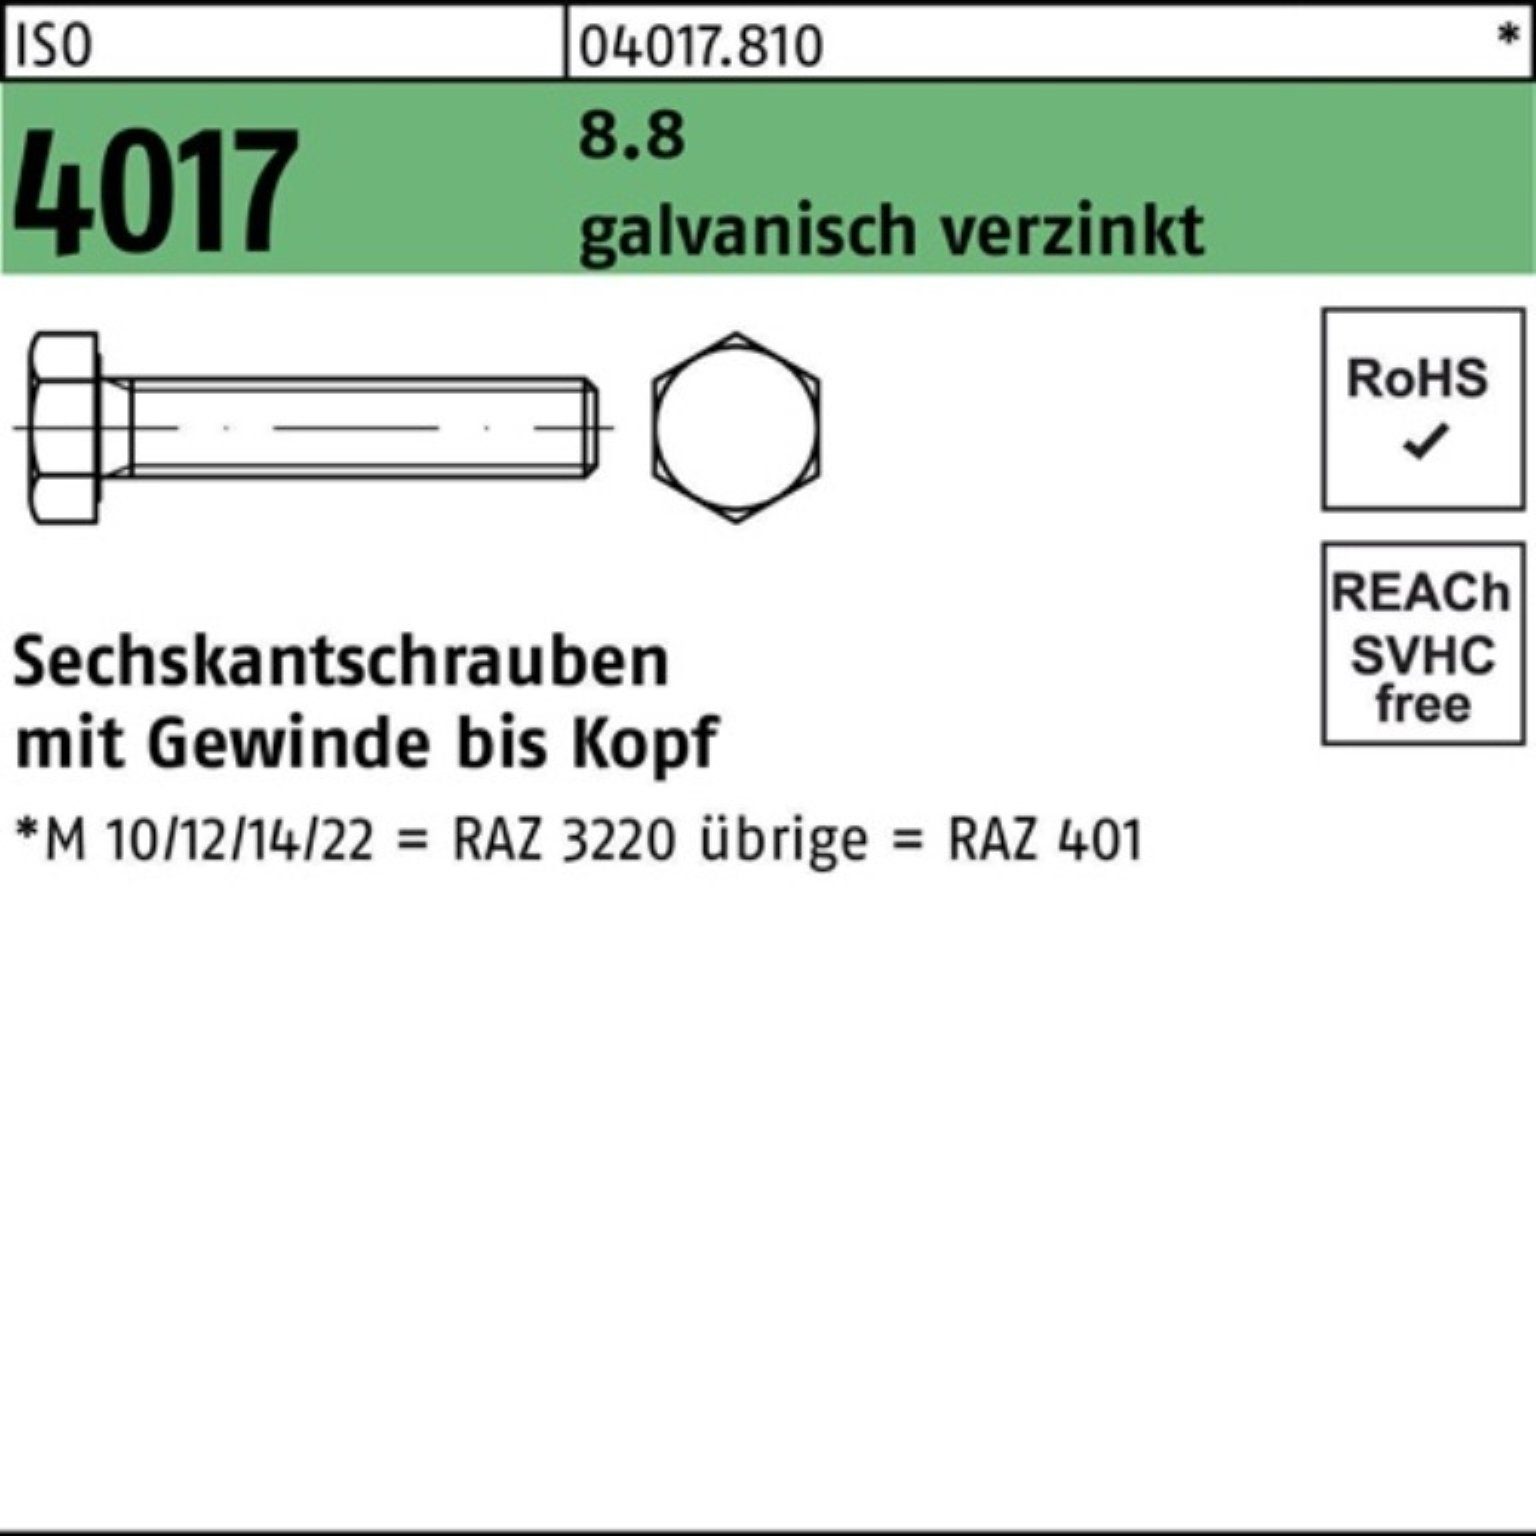 Bufab Sechskantschraube 100er Pack M20x Sechskantschraube 25 4017 ISO VG 75 St 8.8 galv.verz